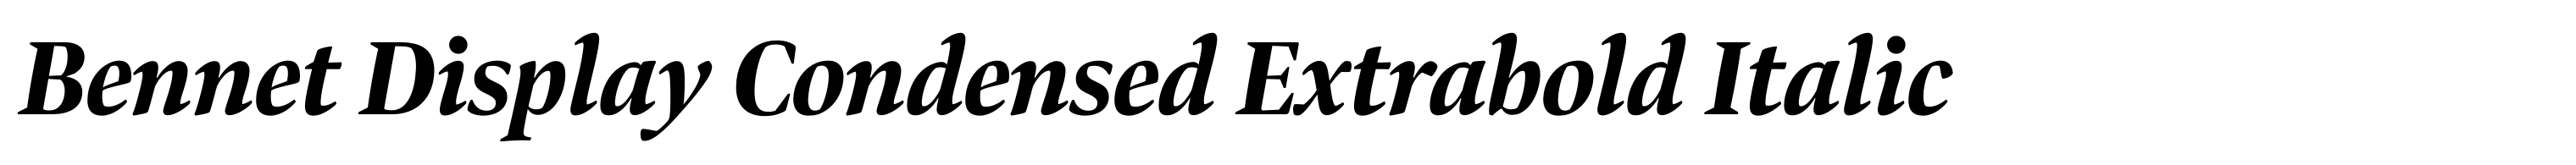 Bennet Display Condensed Extrabold Italic